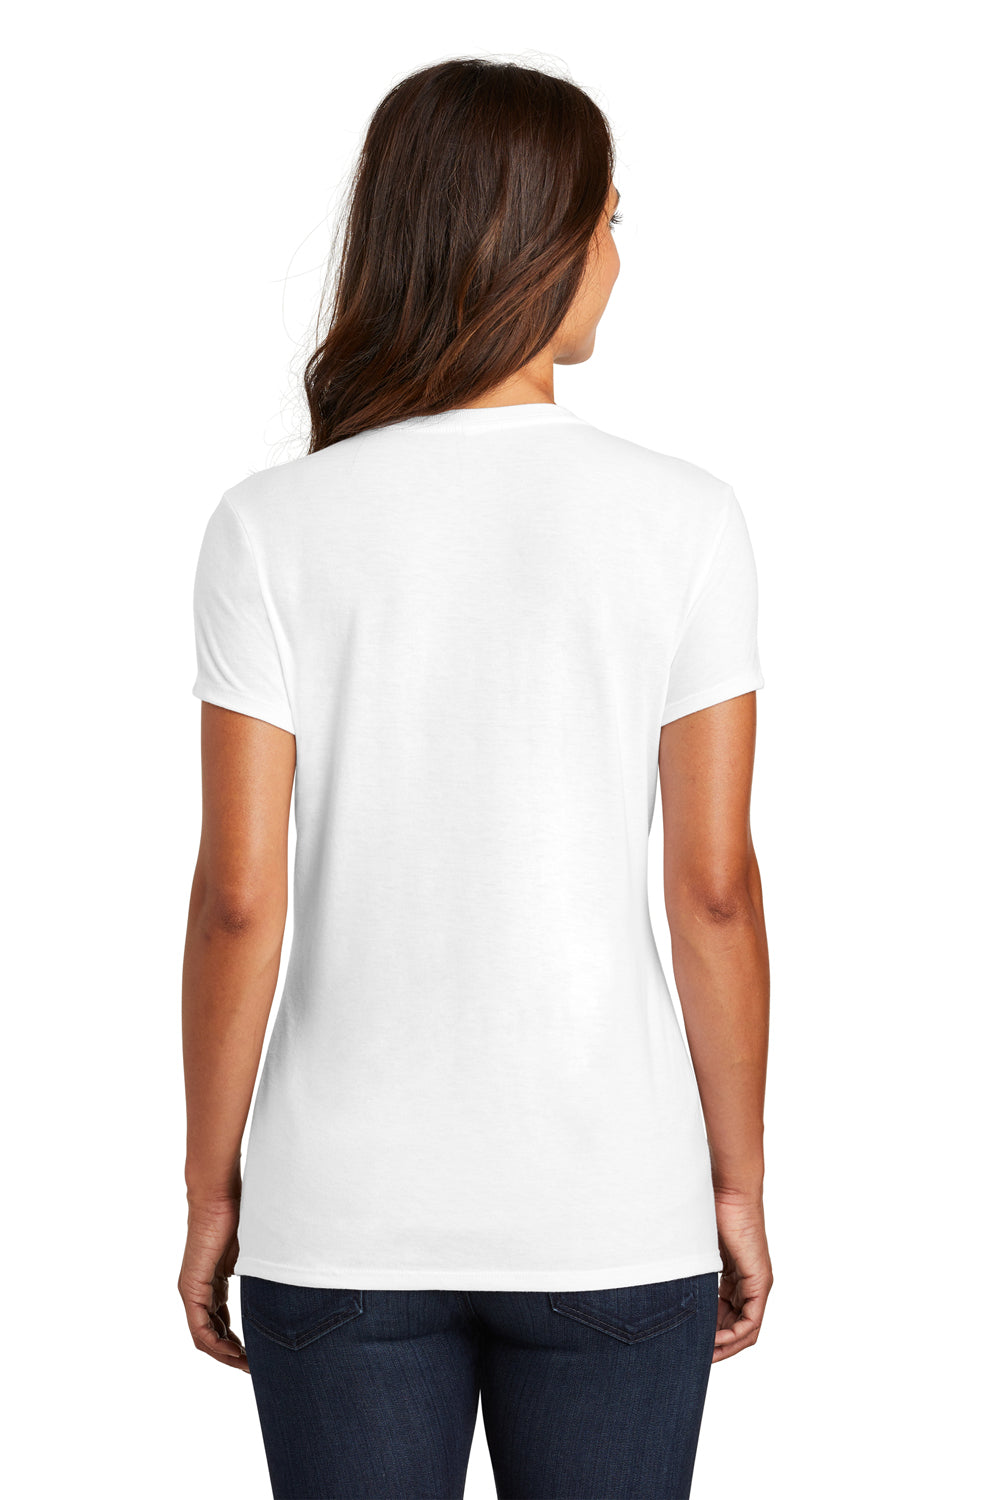 District DM130L Womens Perfect Tri Short Sleeve Crewneck T-Shirt White Back